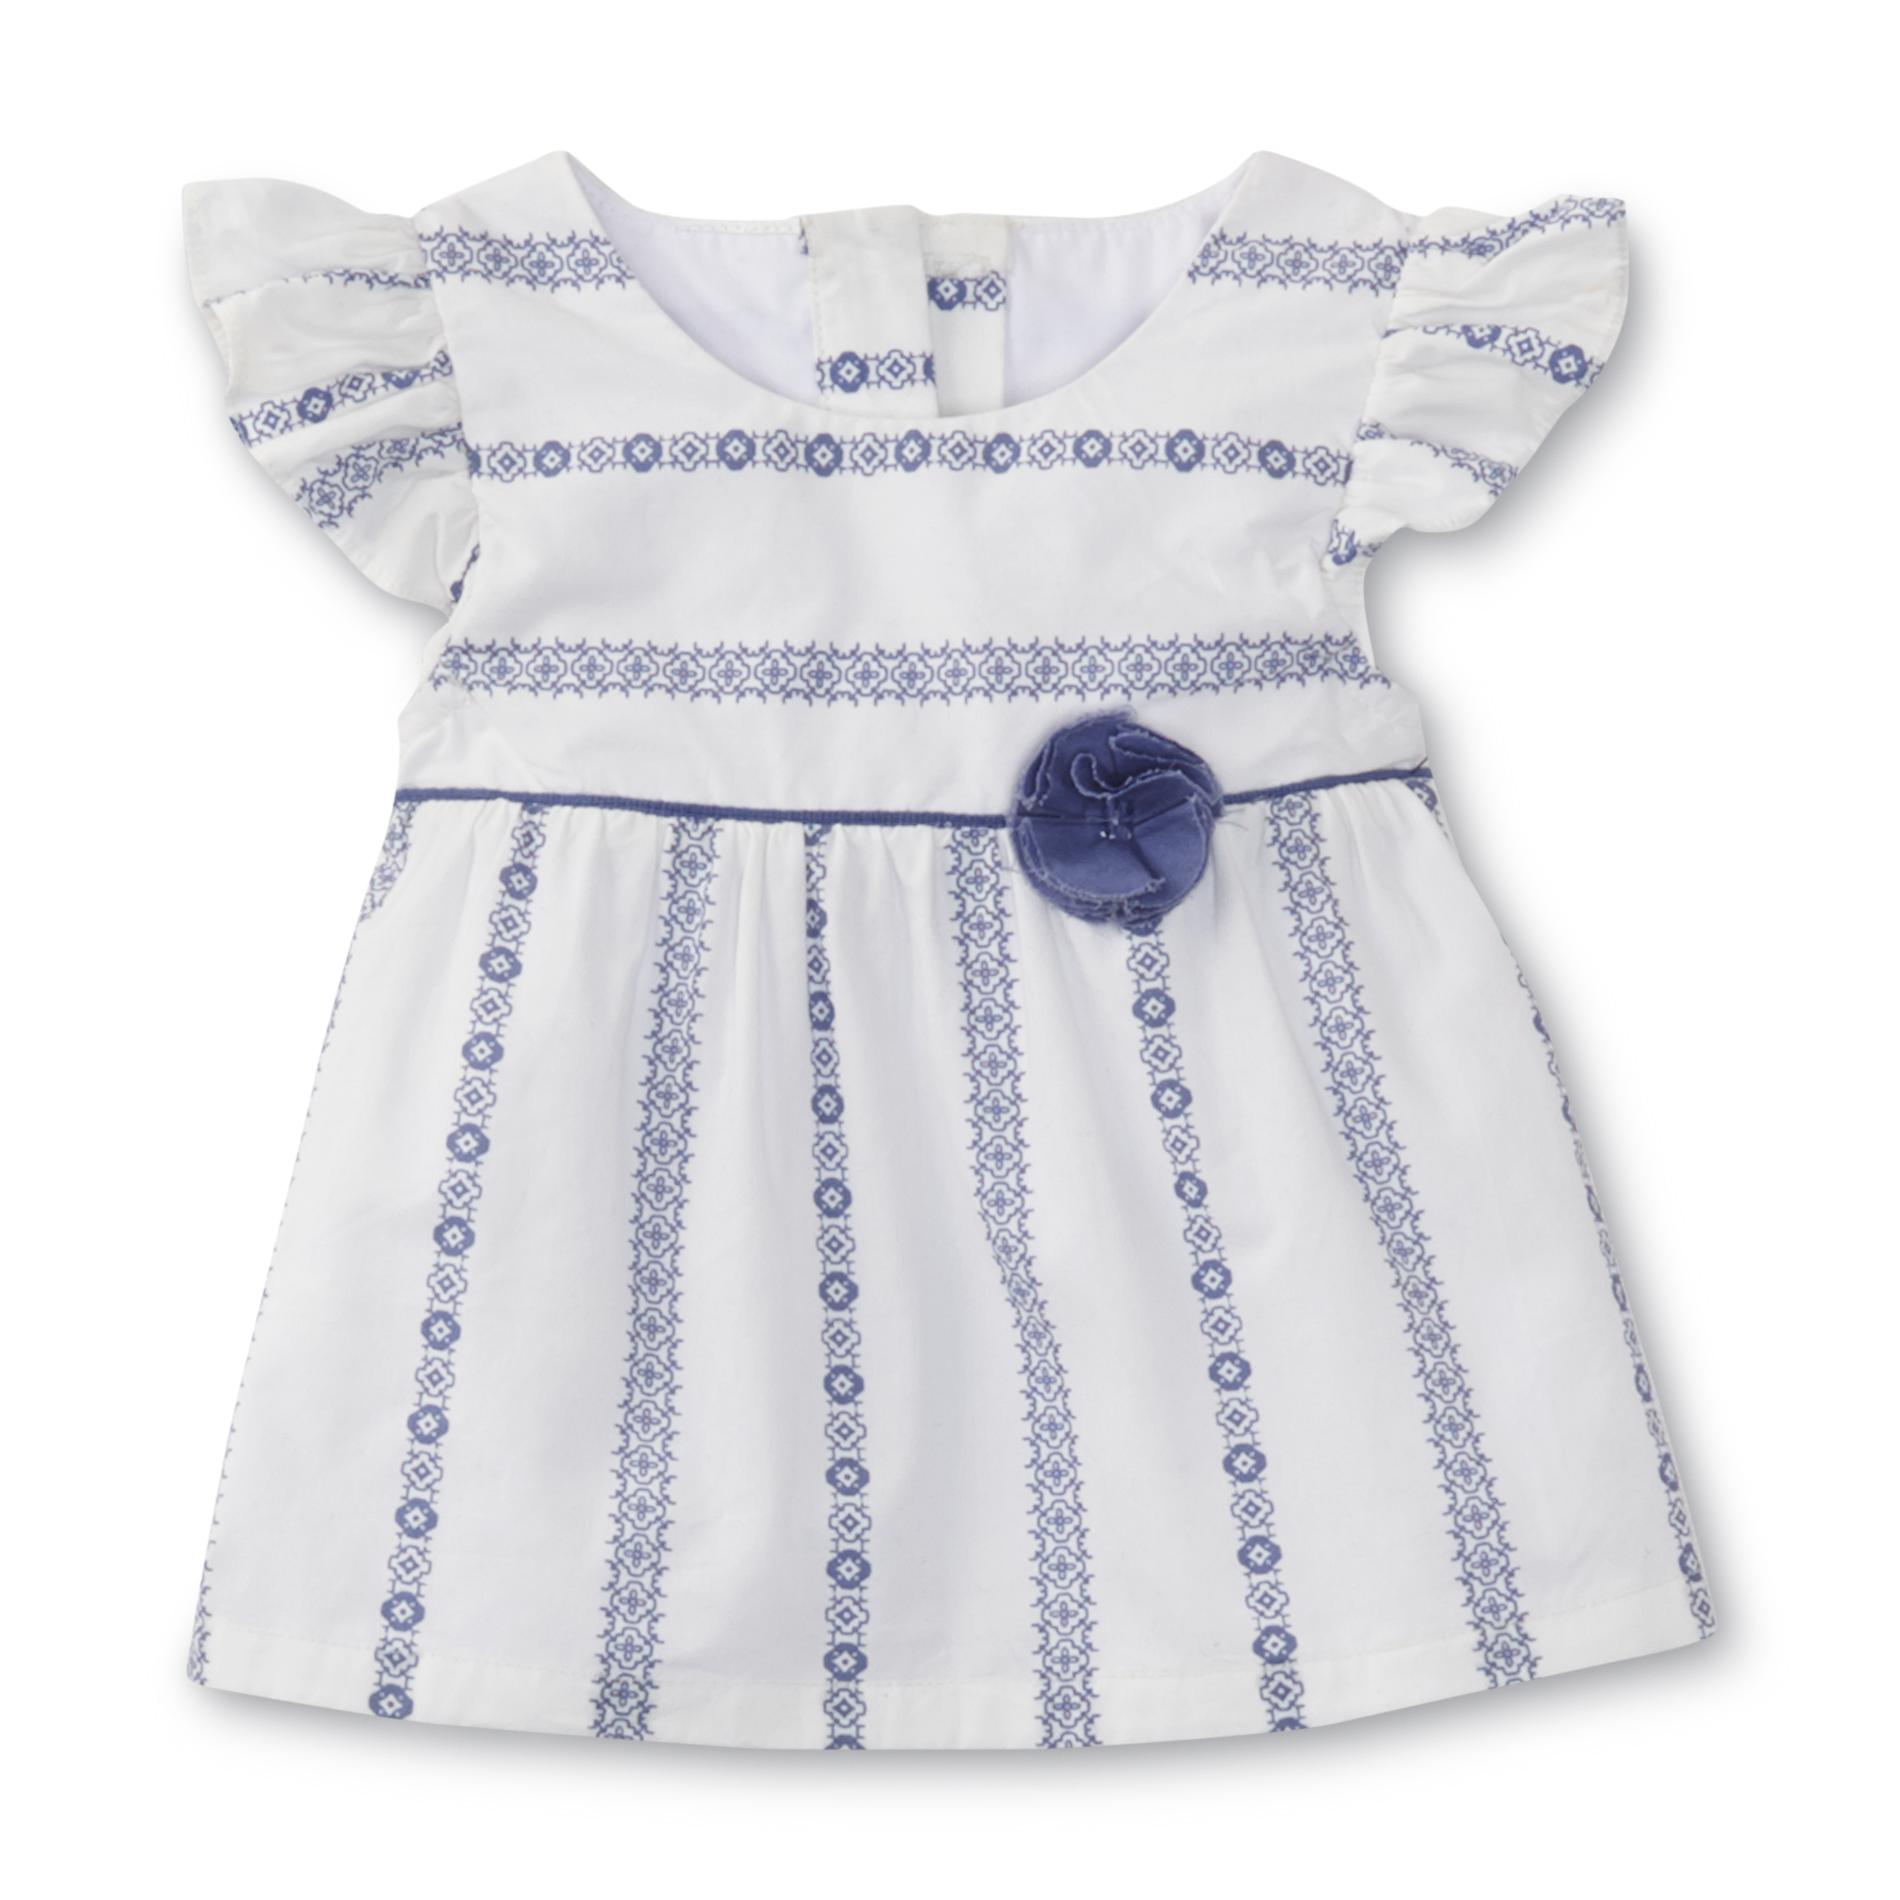 Little Wonders Newborn & Infant Girl's Flutter Sleeve Top - Striped